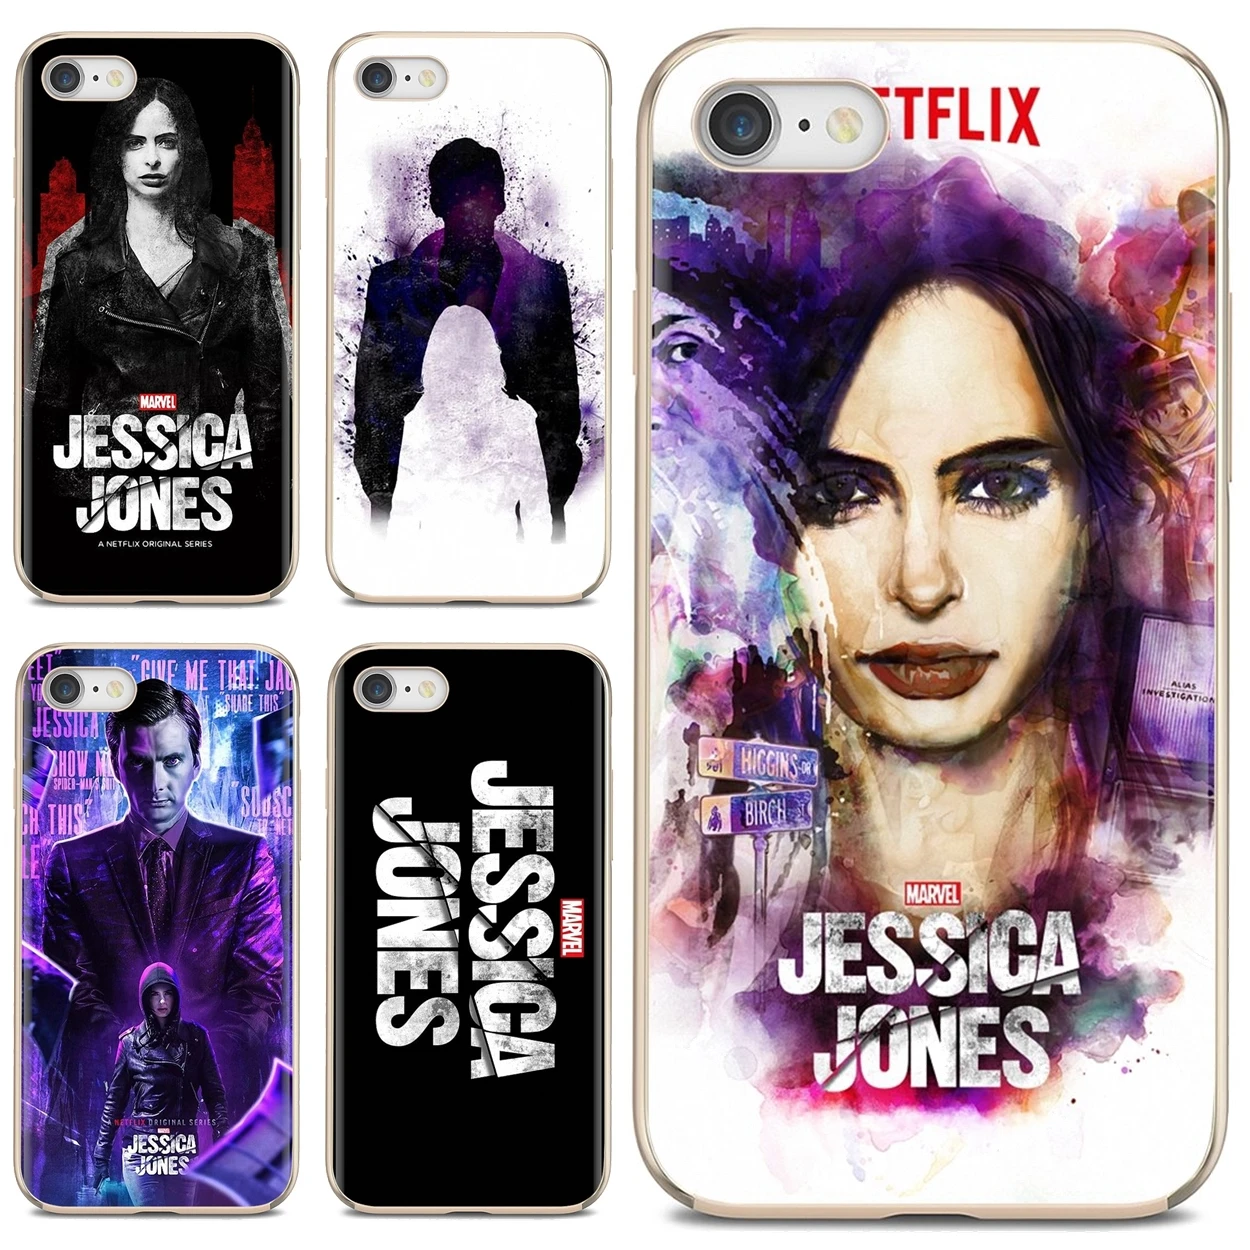 

For iPod Touch iPhone 10 11 12 Pro 4S 5S SE 5C 6 6S 7 8 X XR XS Plus Max 2020 Cell Phone Case Jessica Jones Marvel Comics 2015